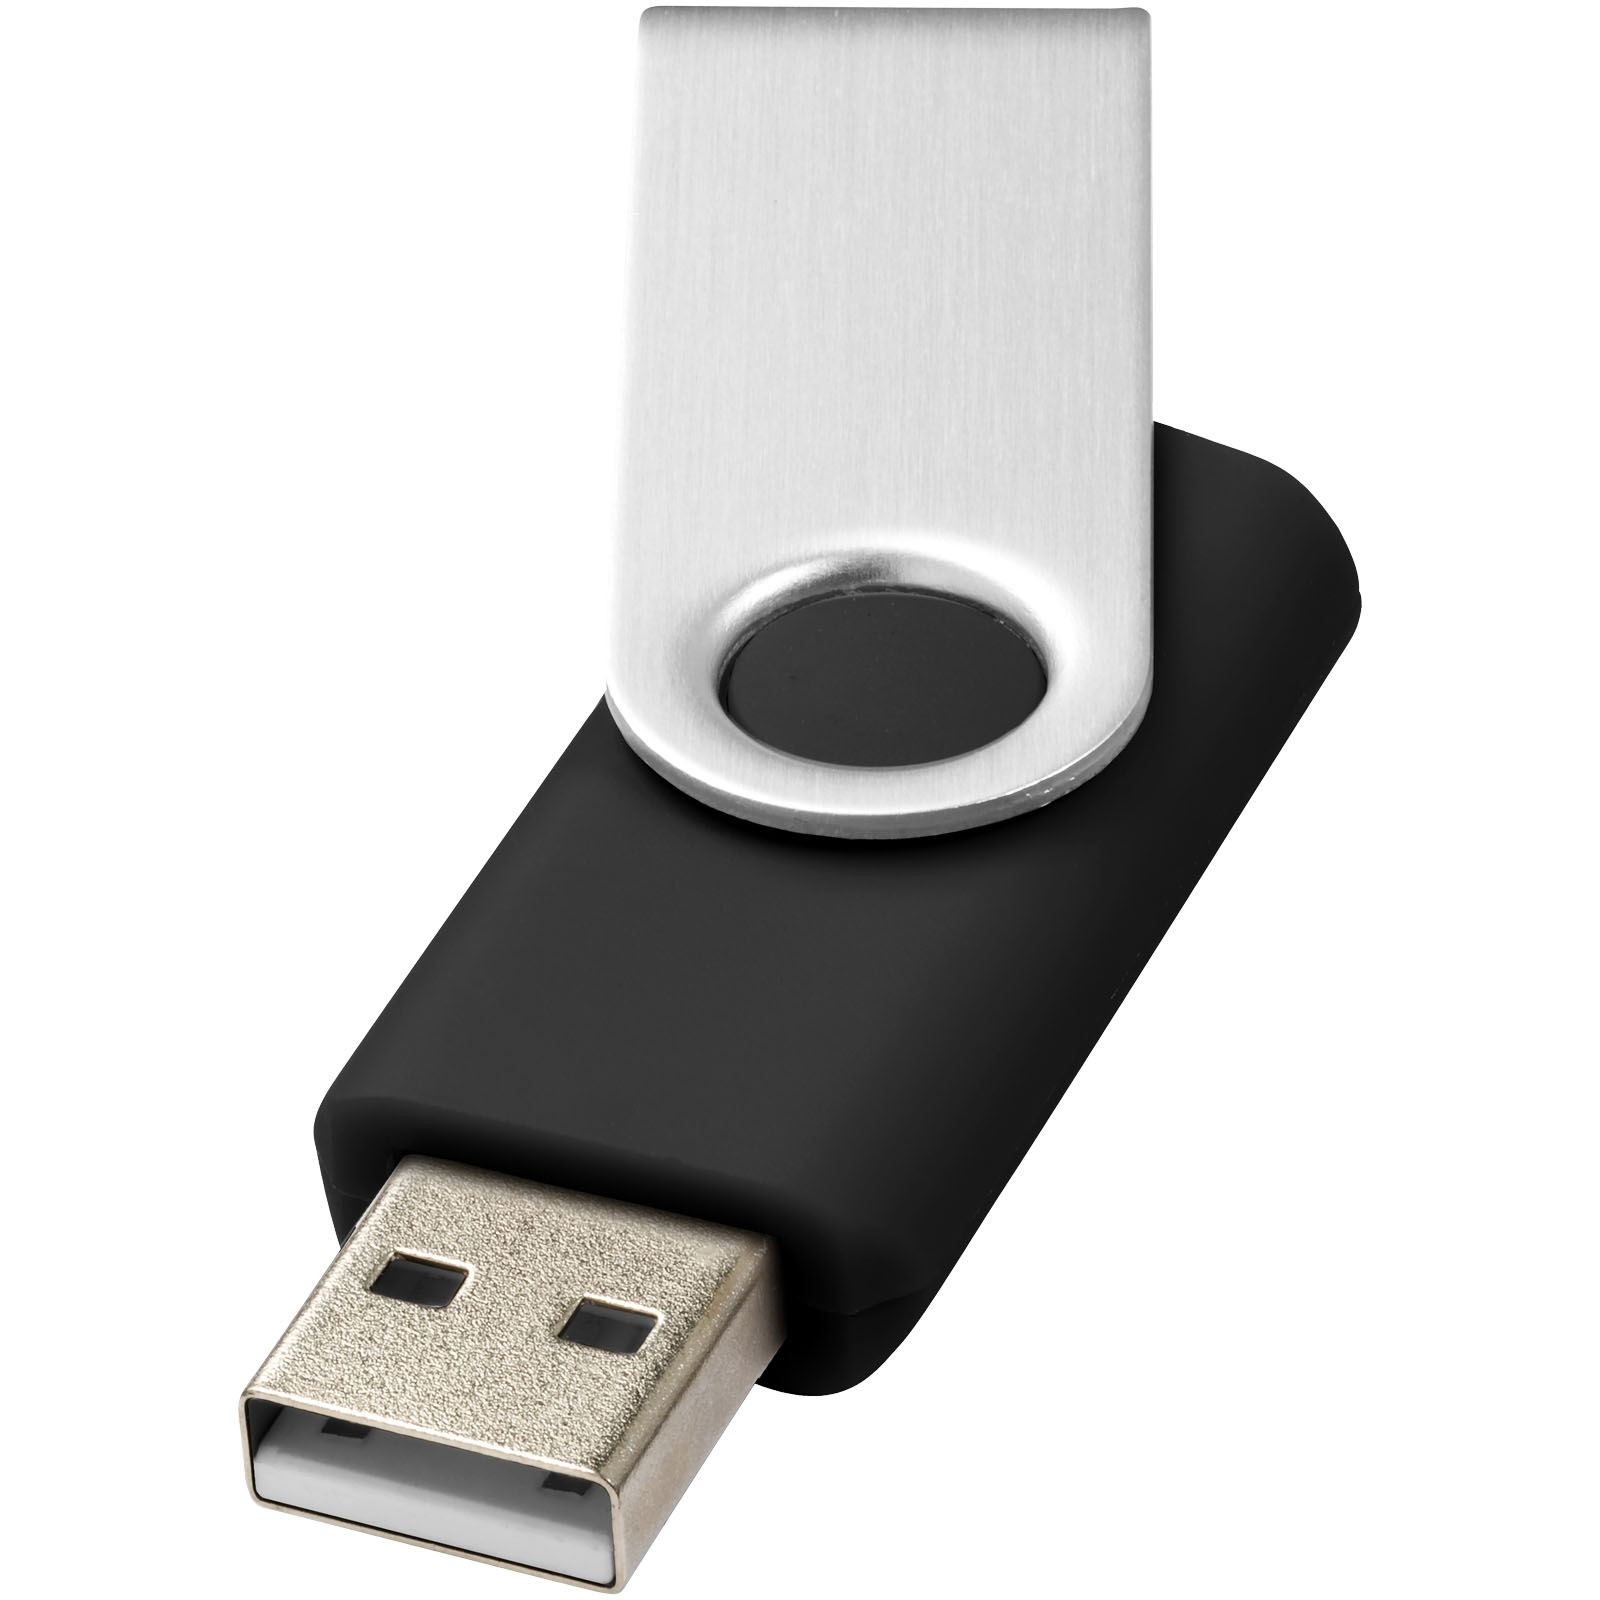 USB Flash Drives - Rotate-basic 16GB USB flash drive